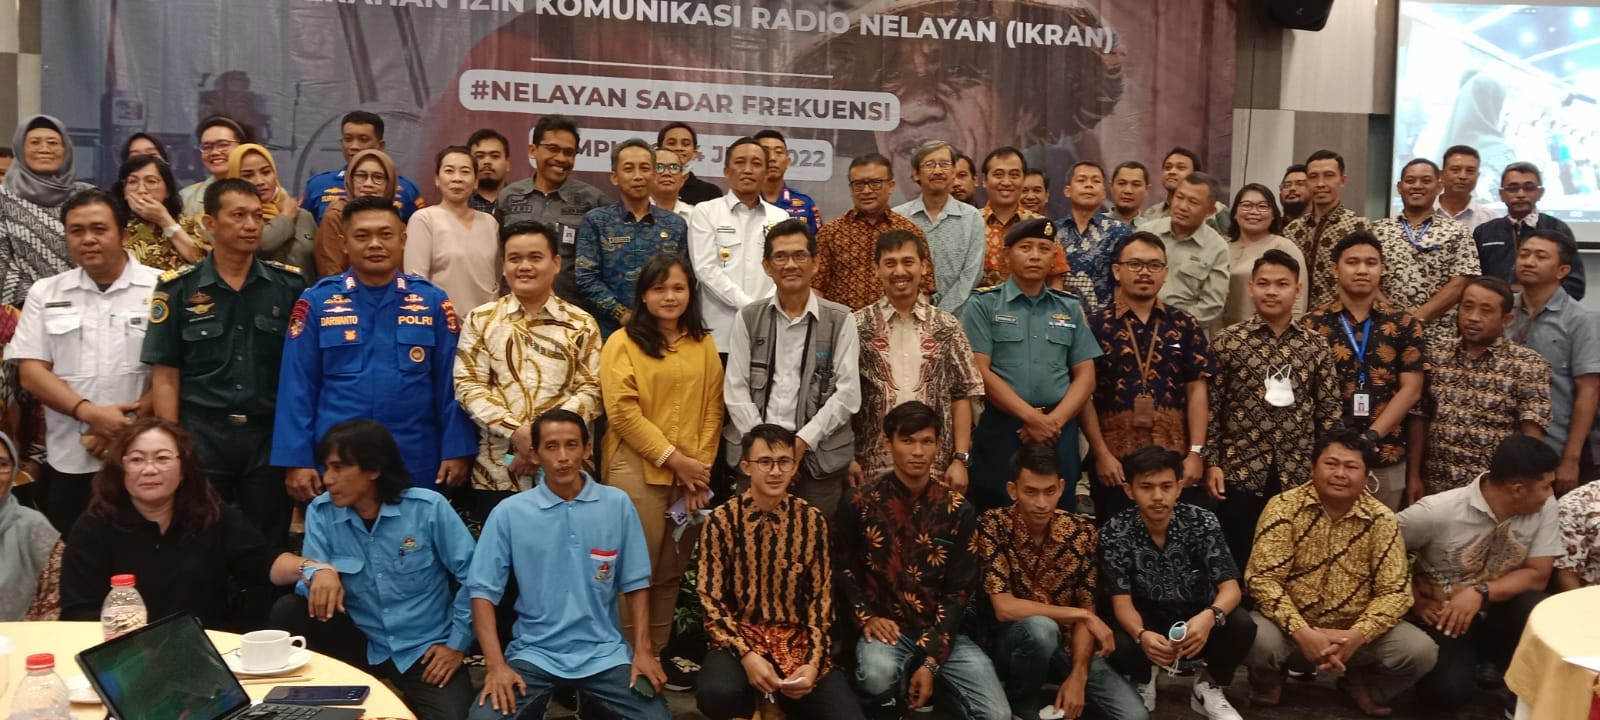 Provinsi Lampung Pilot Projek Uji coba Penggunaan Frekuensi Radio HF Untuk Komunikasi Nelayan